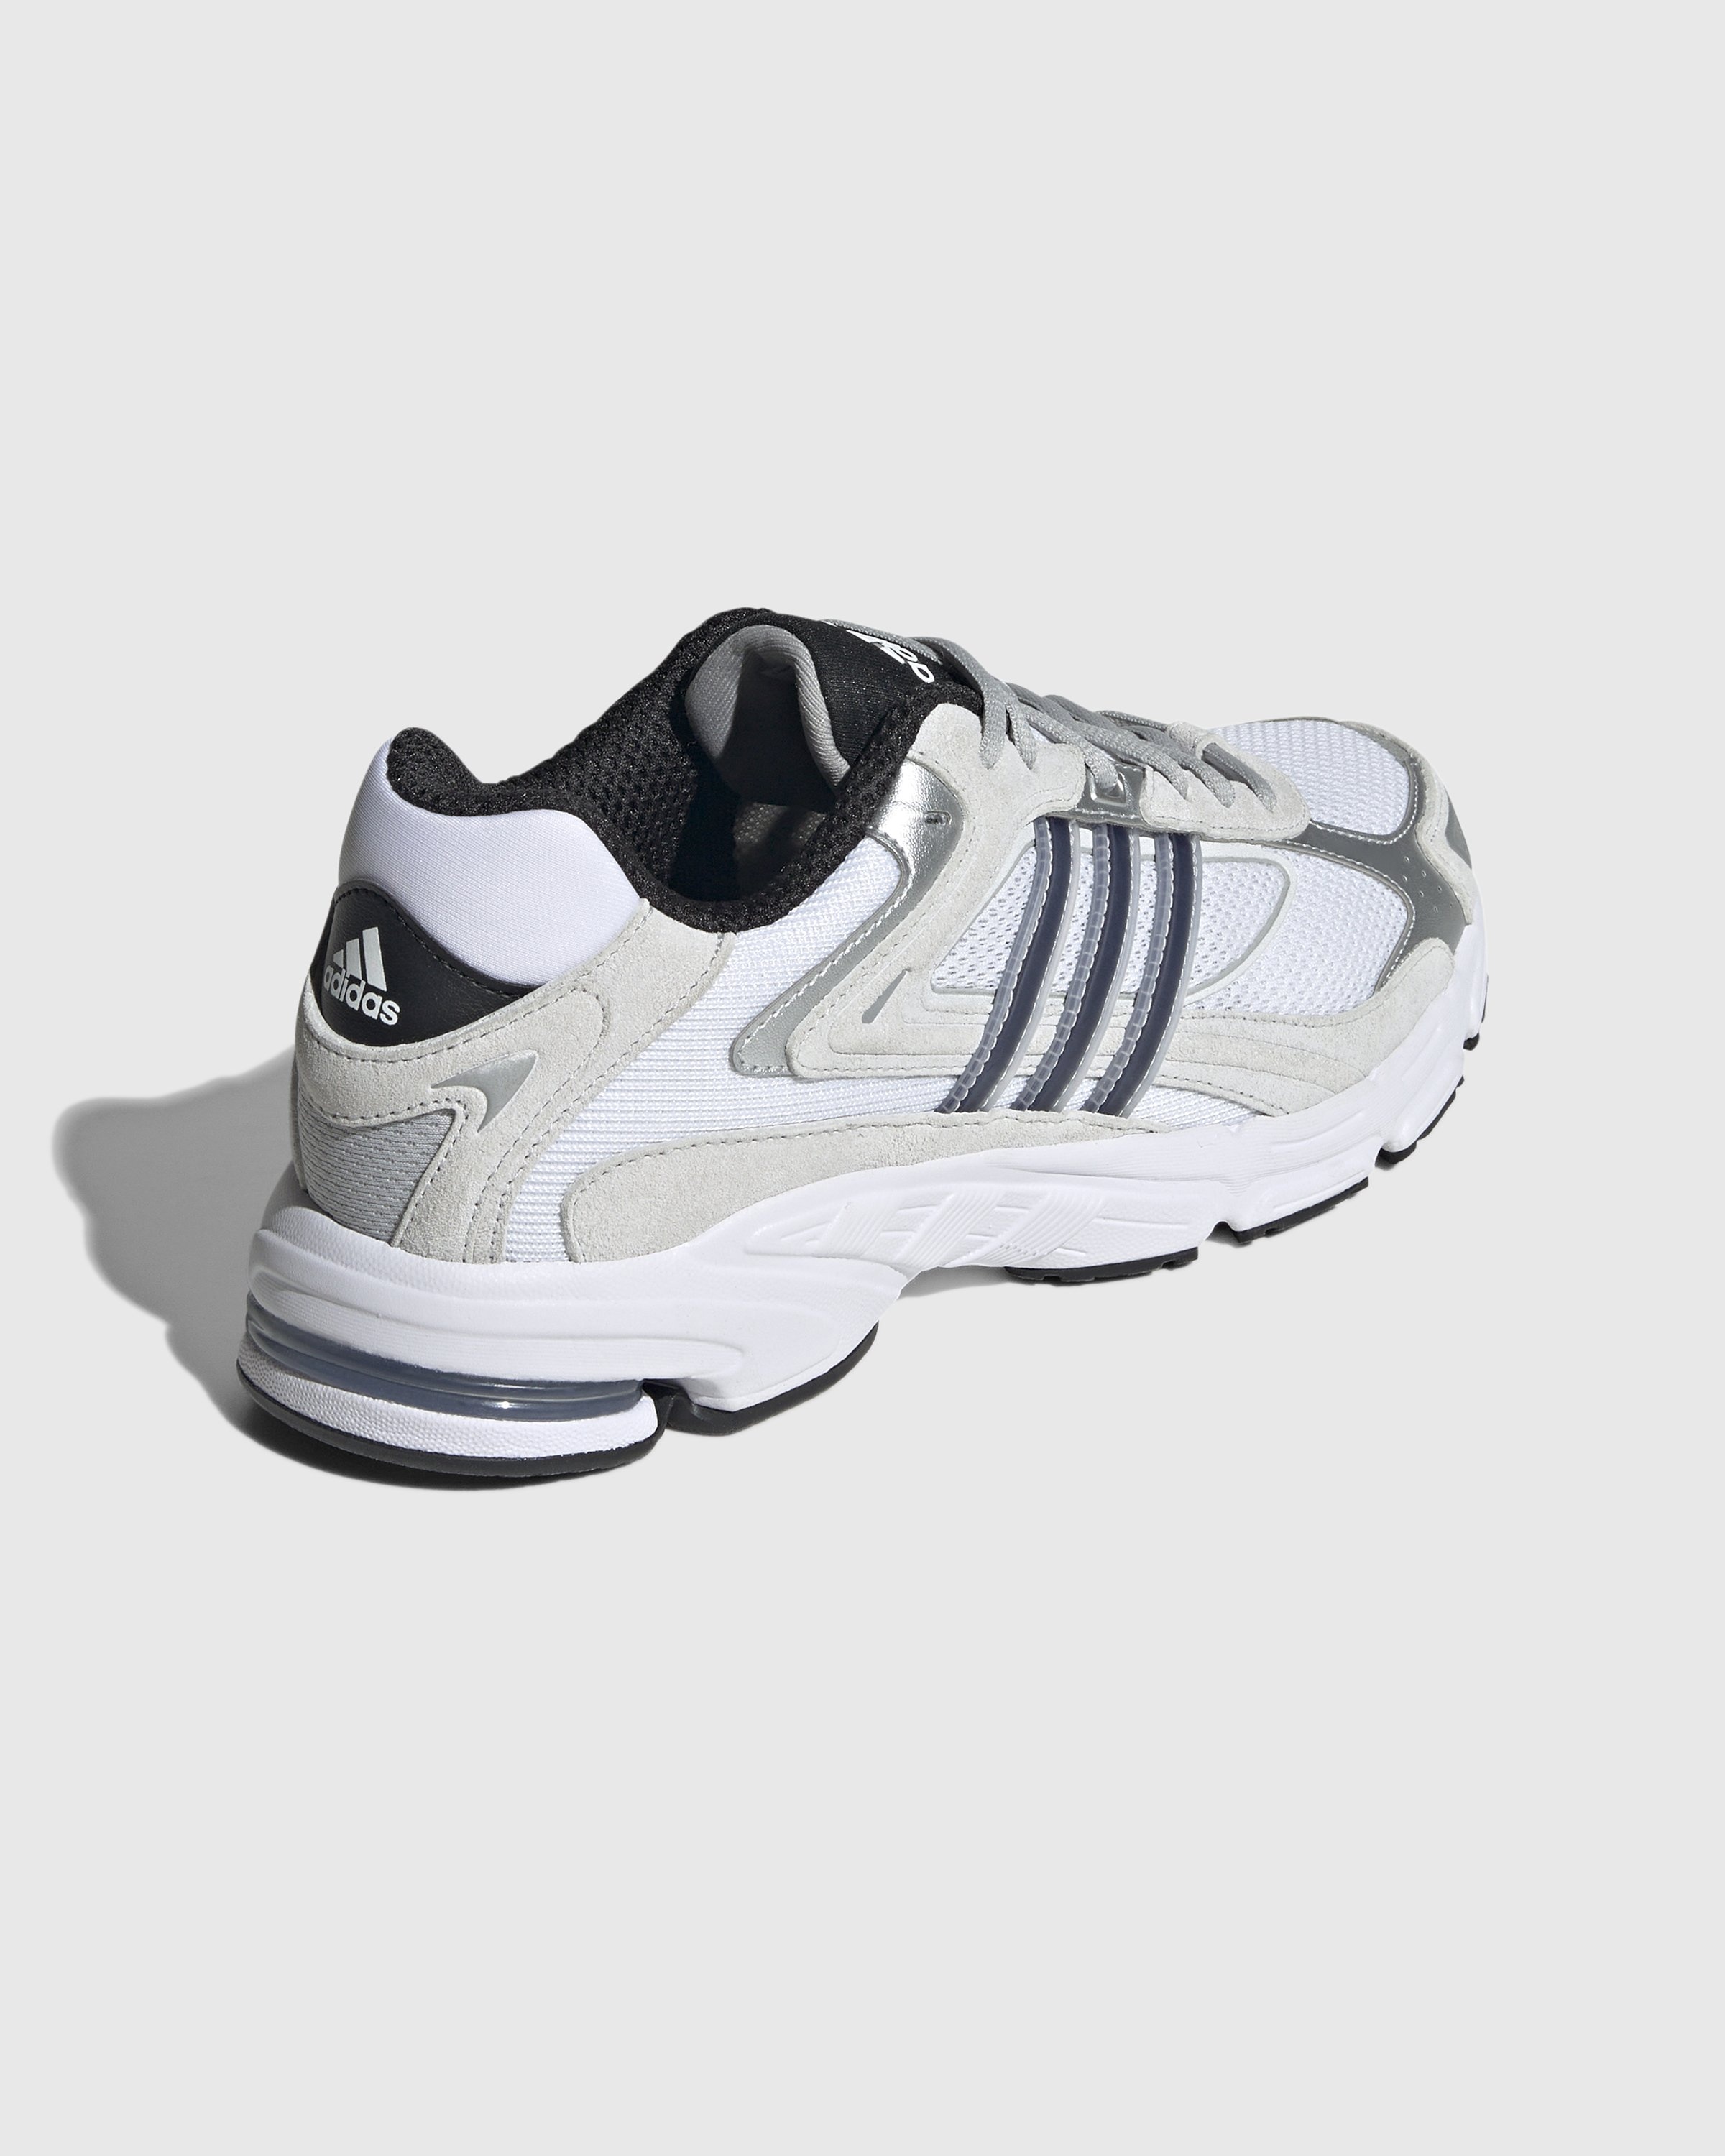 Adidas – Response CL White/Black | Highsnobiety Shop